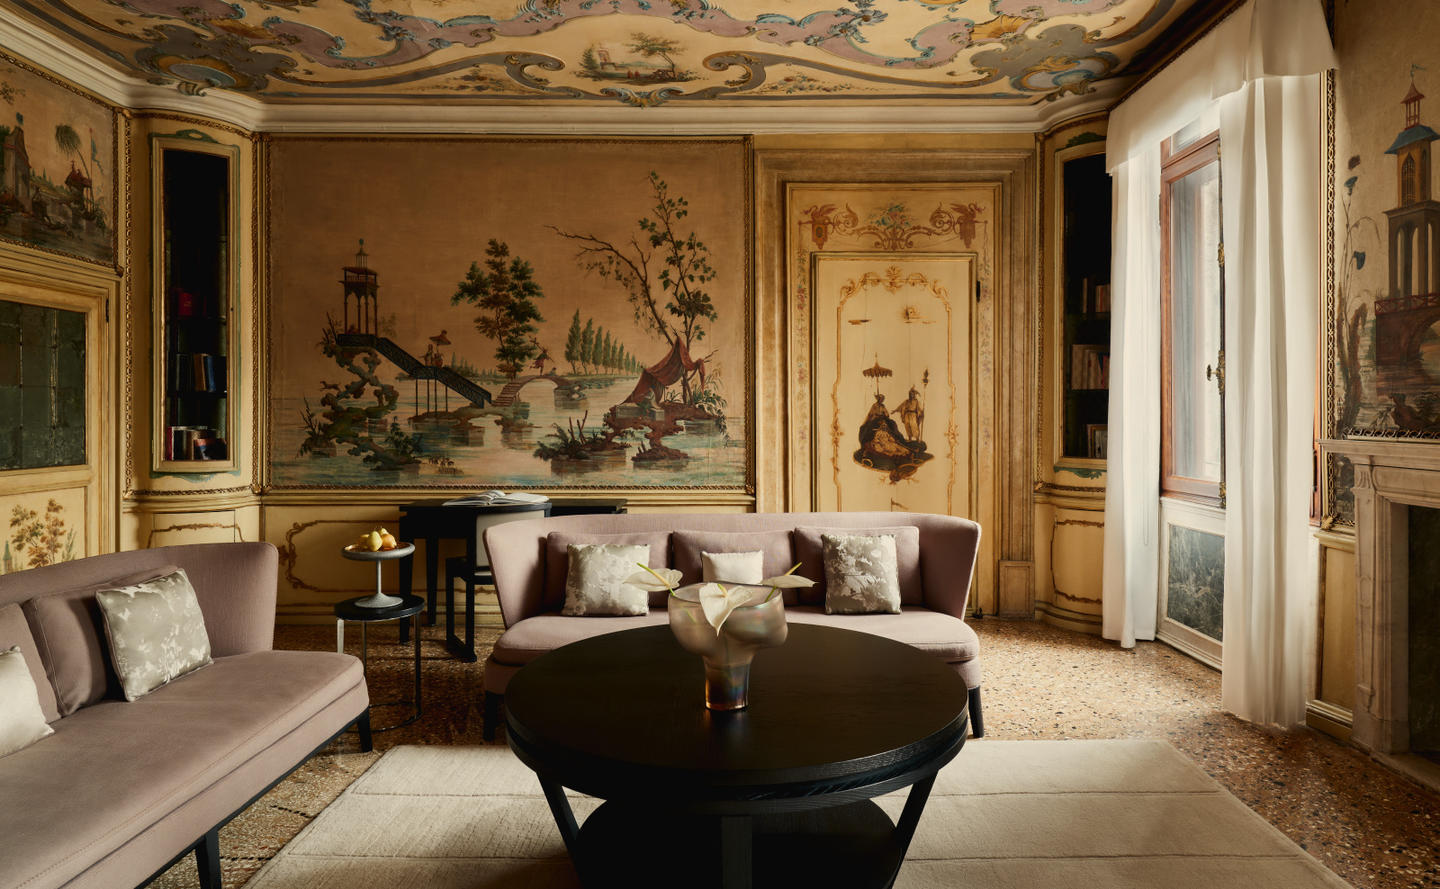 Aman Venice, Italy - Alcova Tiepolo Suite, Living Room 